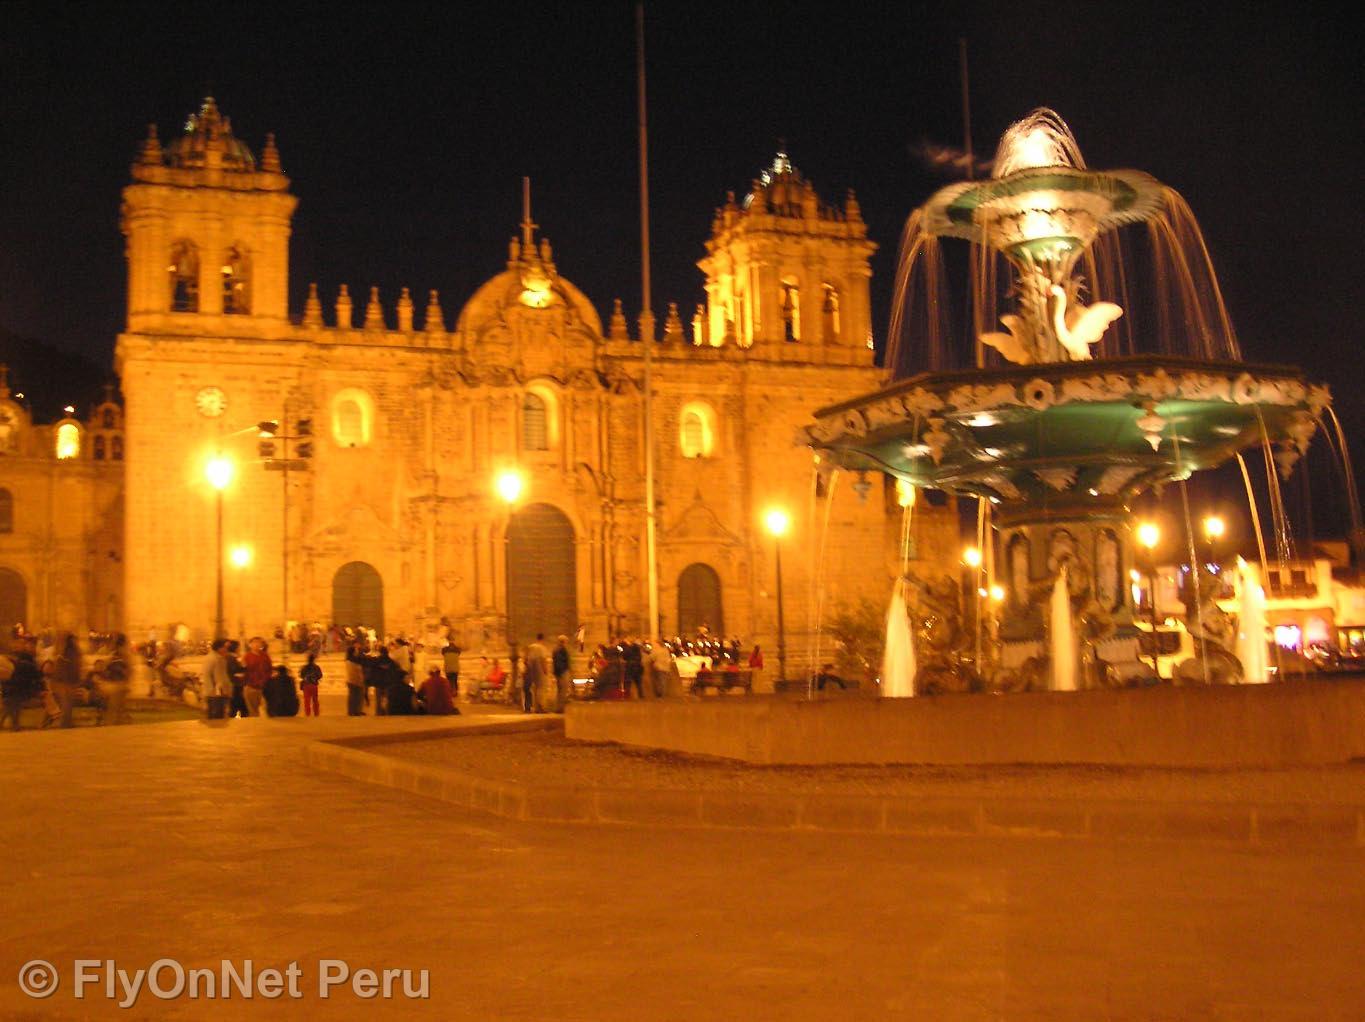 Album photos: Cathédrale de Cuzco